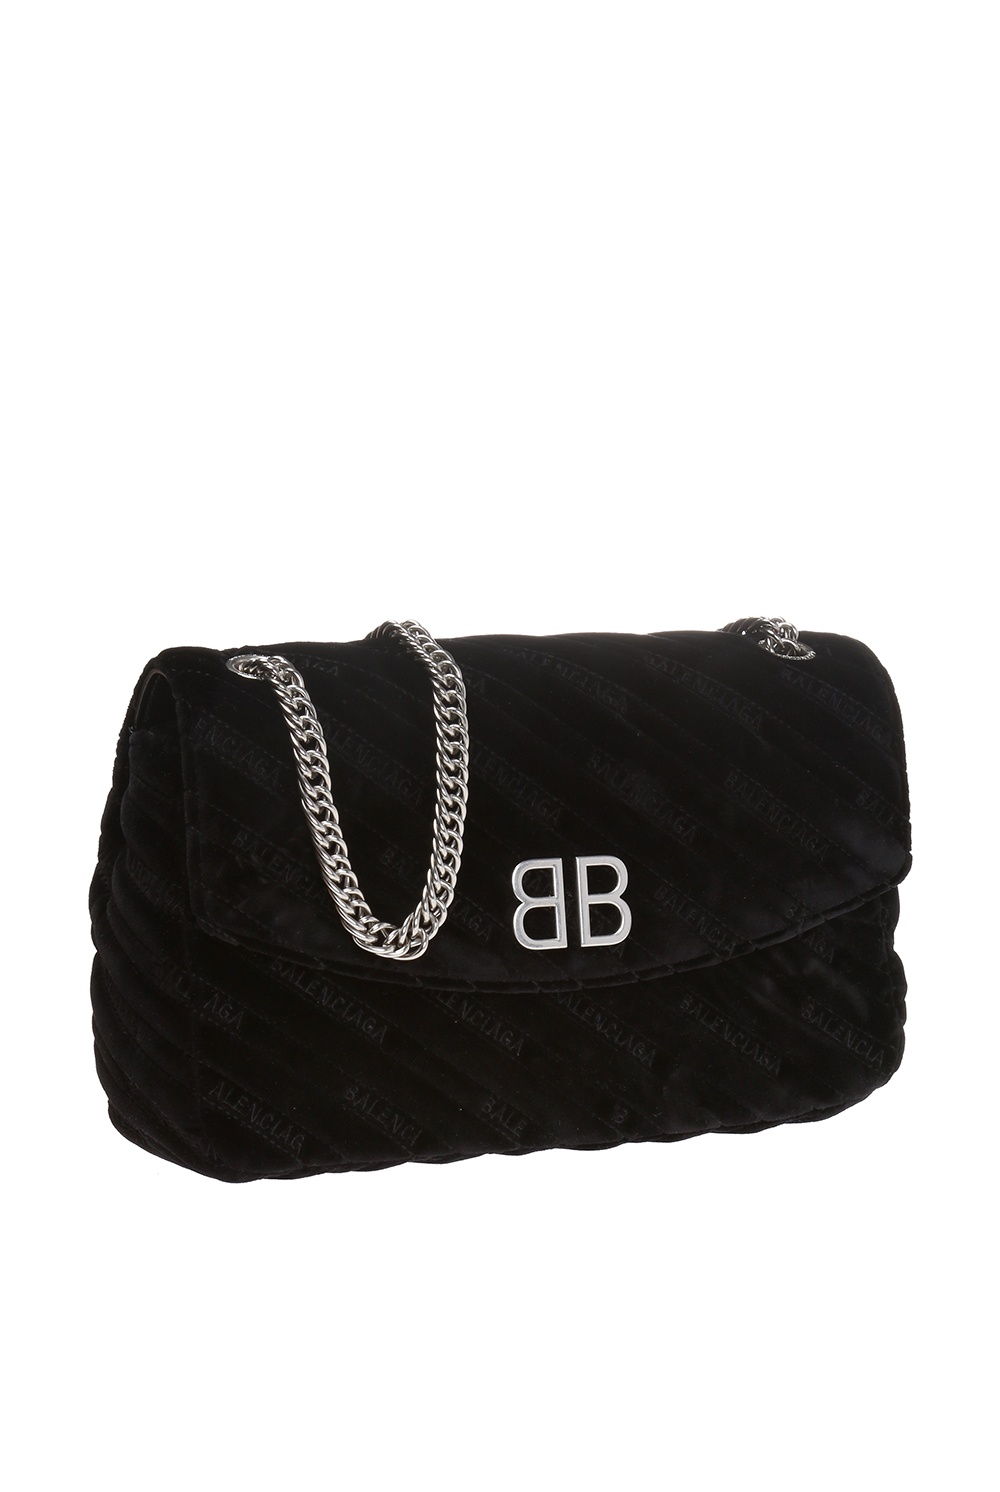 &#39;BB&#39; quilted bag with a logo Balenciaga - Vitkac US